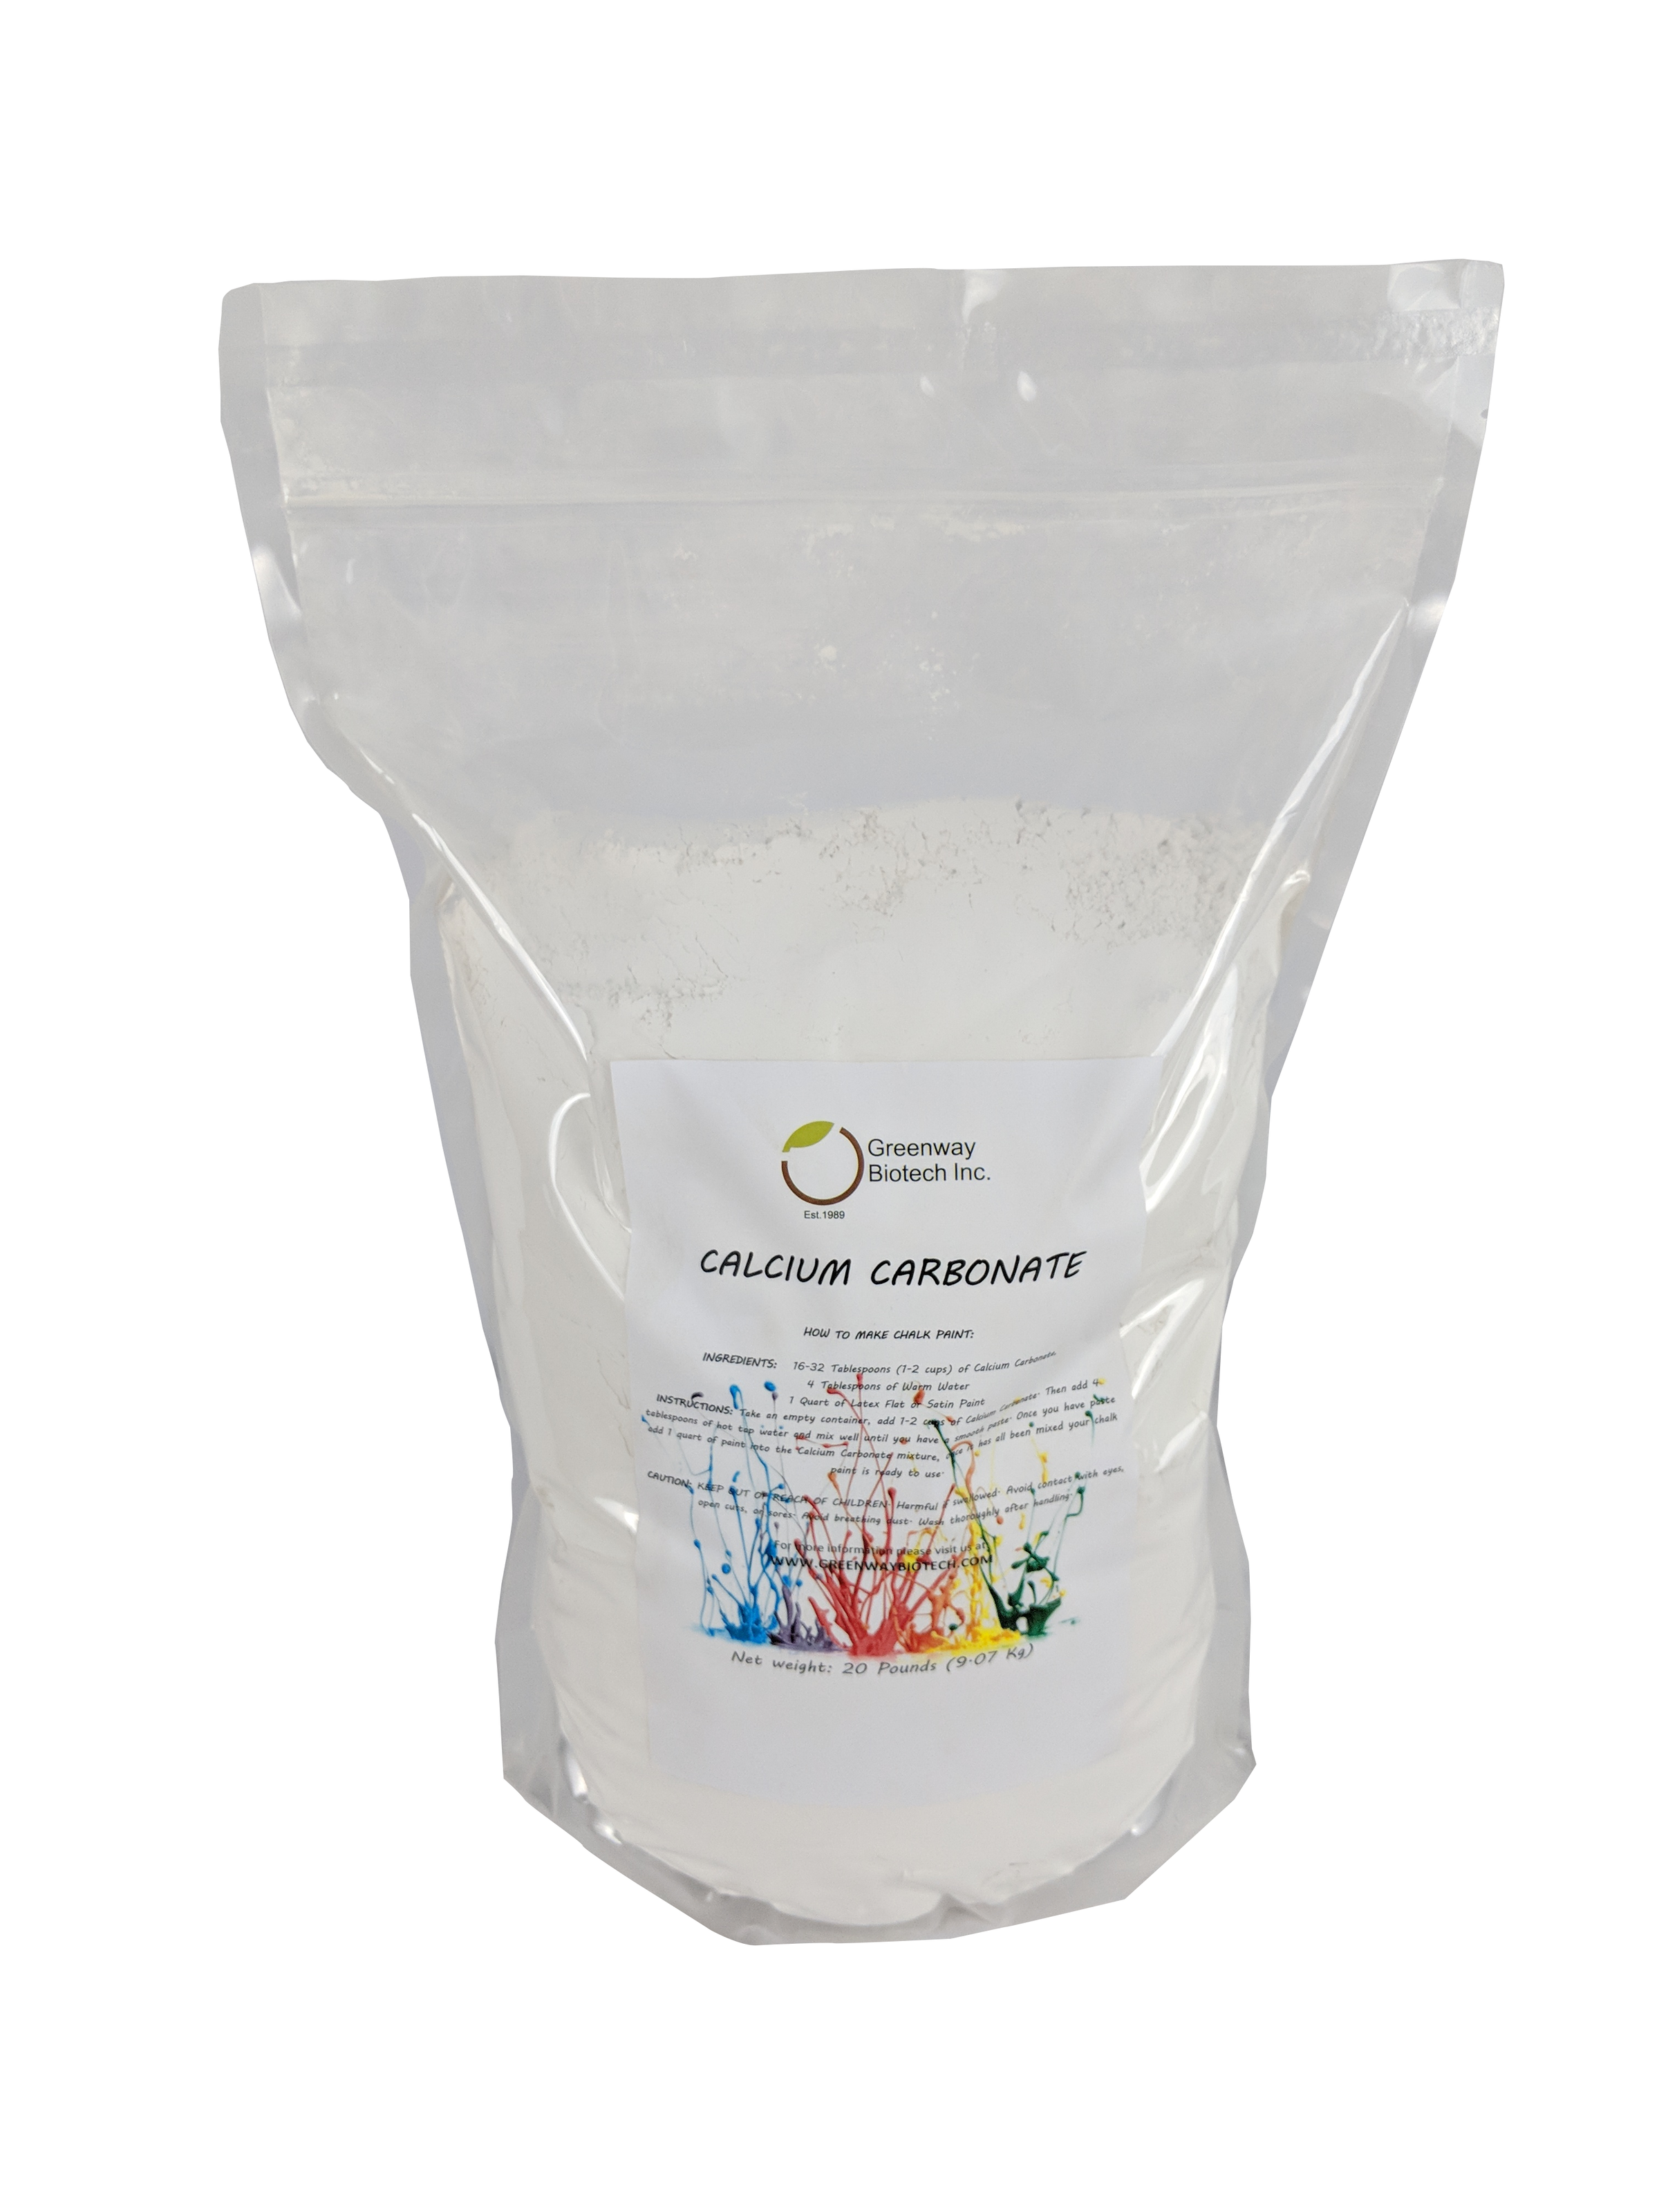 Calcium Carbonate Powder Greenway Biotech Brand Chalk Paint Additive Limestone Powder Rock Dust Very Fine Powder 20 Pounds